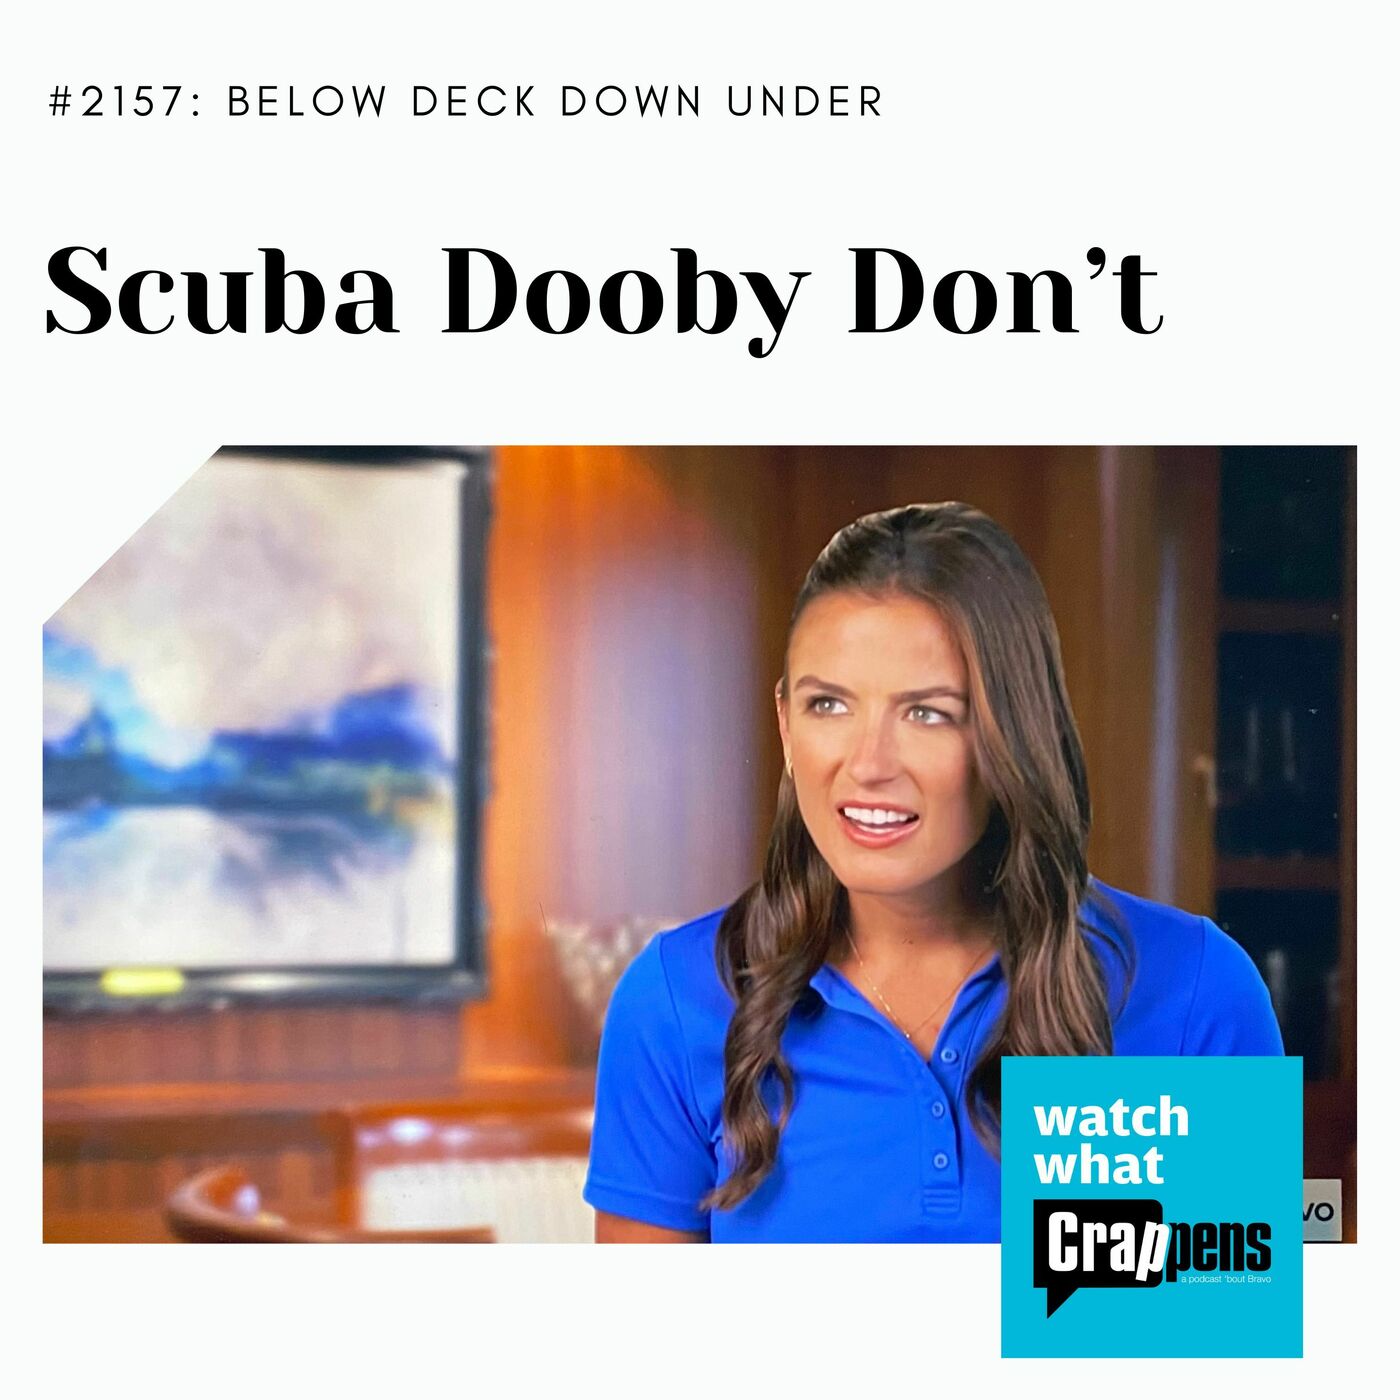 Below Deck Down Under: Scuba Dooby Don't